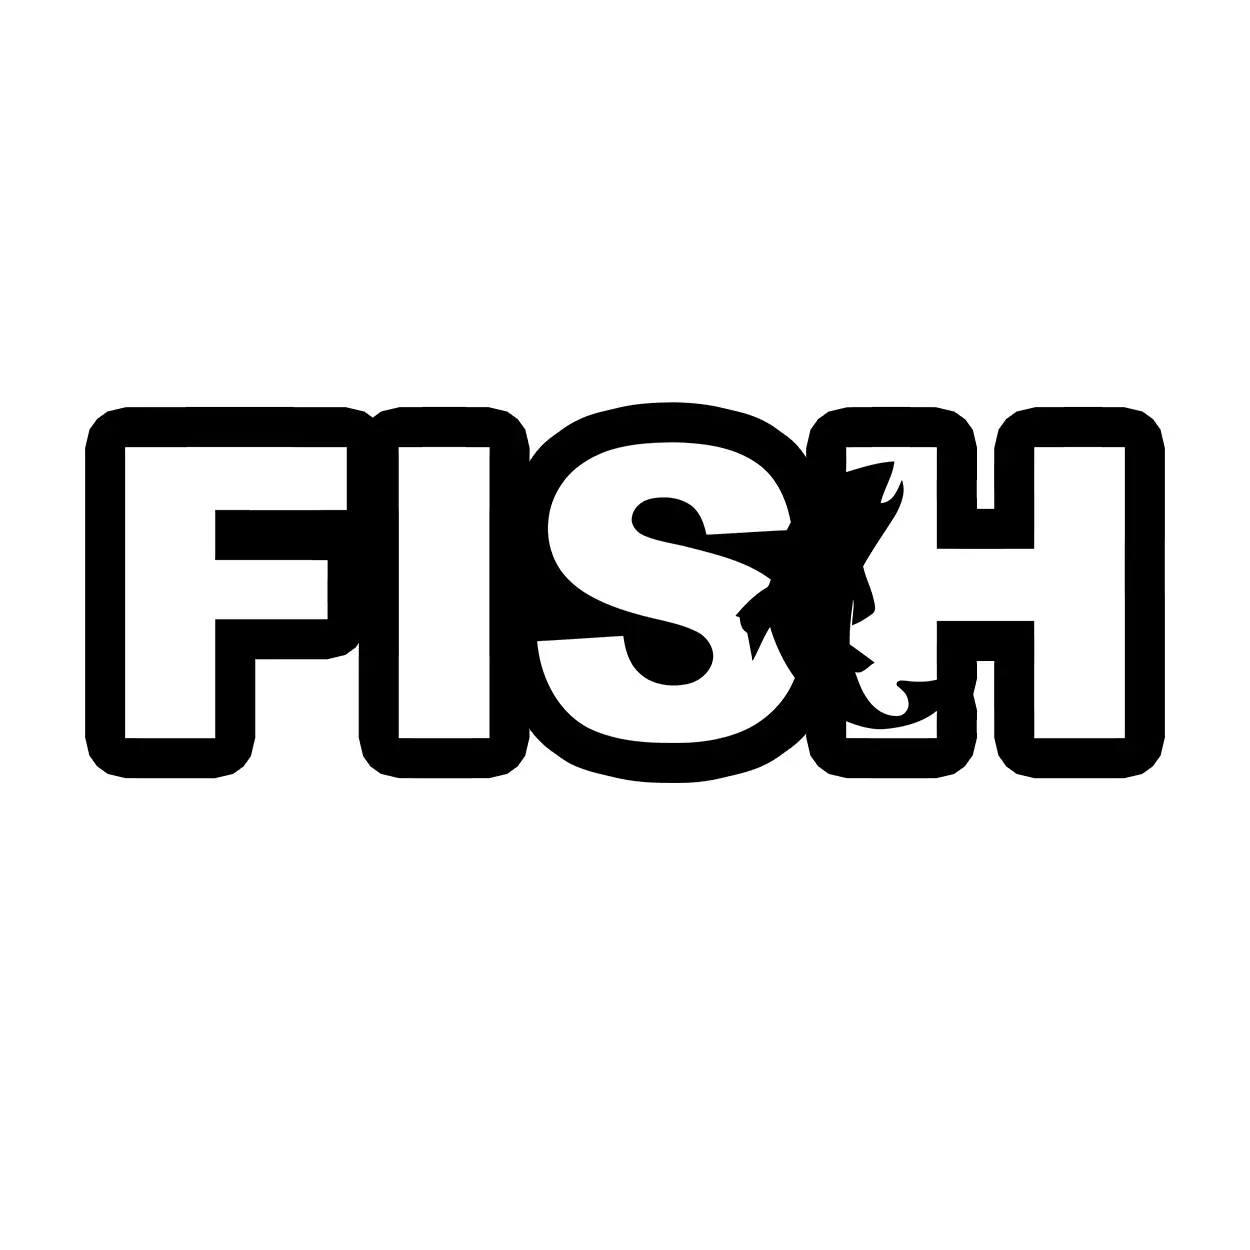 Fish catch logo sticker